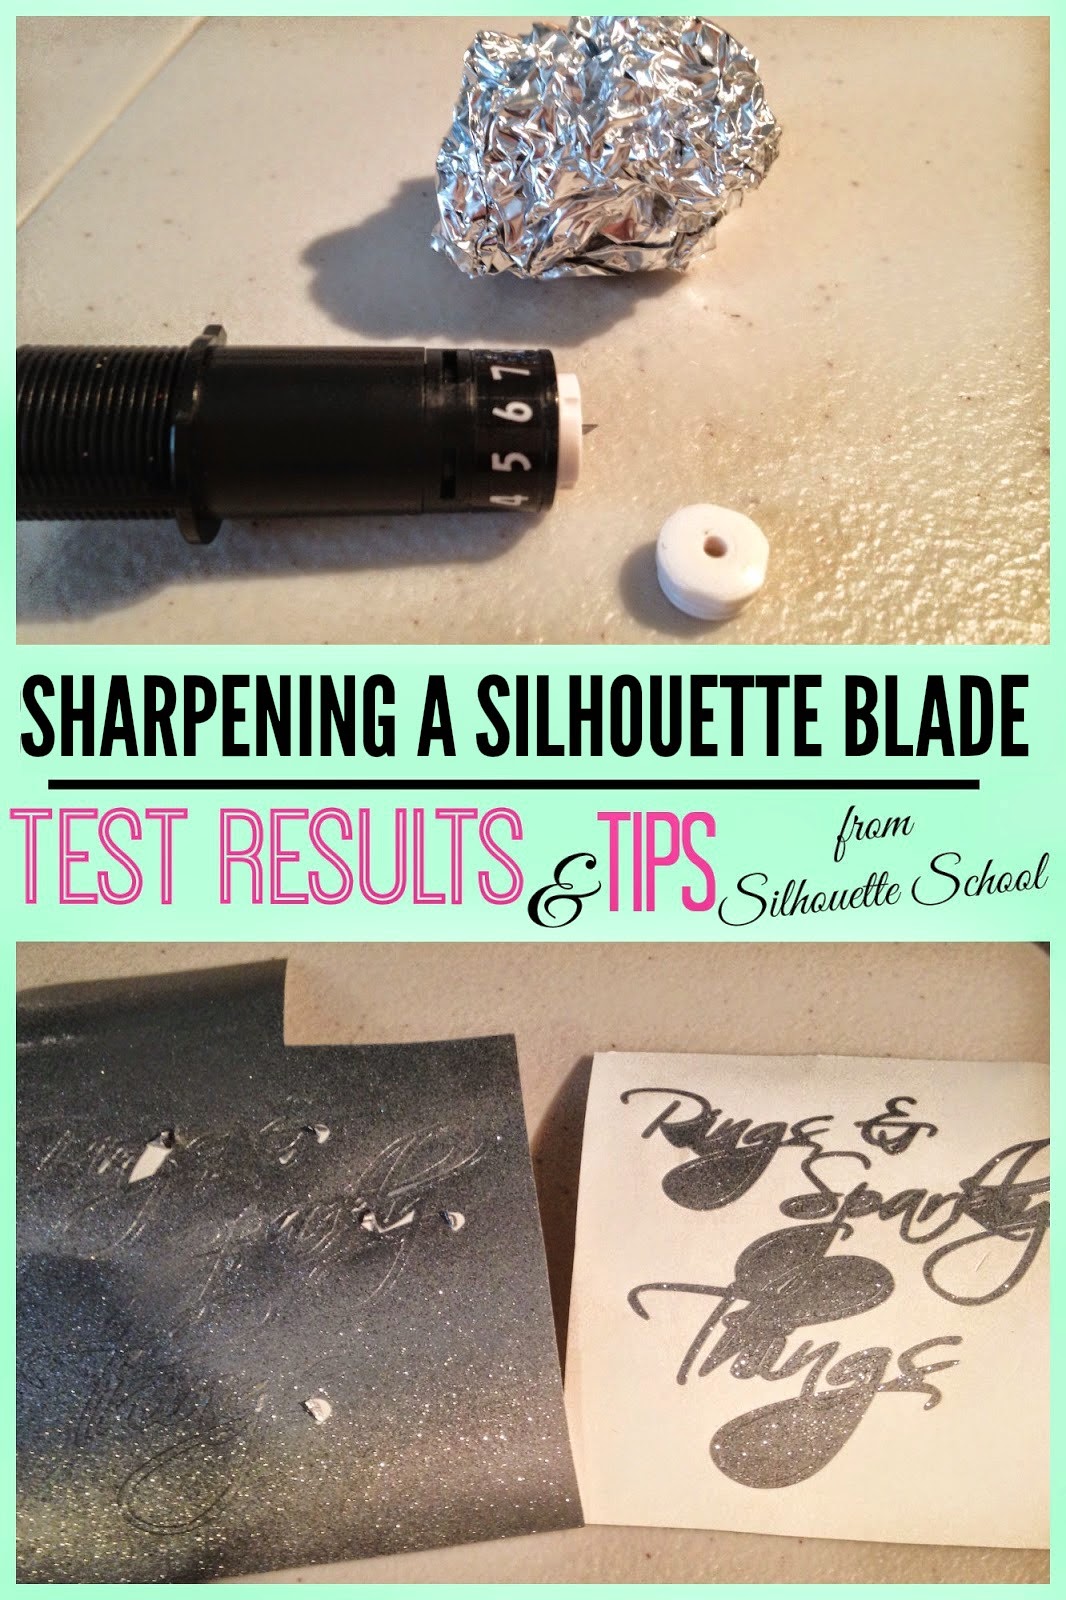 Silhouette blade, sharpening, tin foil, test